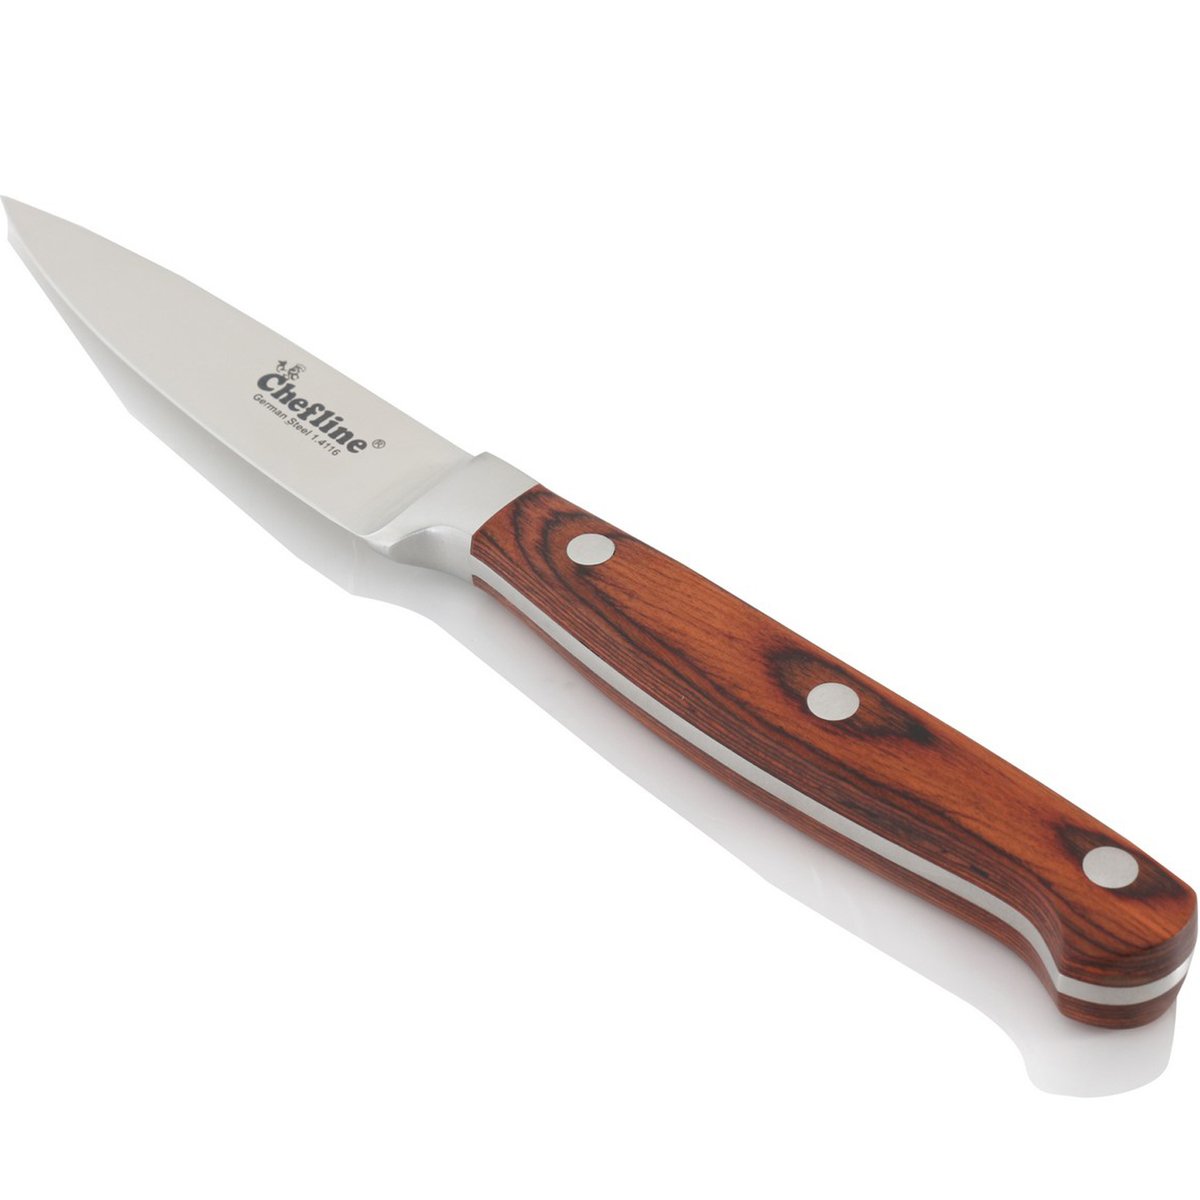 Chefline Paring Knife CM003-05 3.5inch